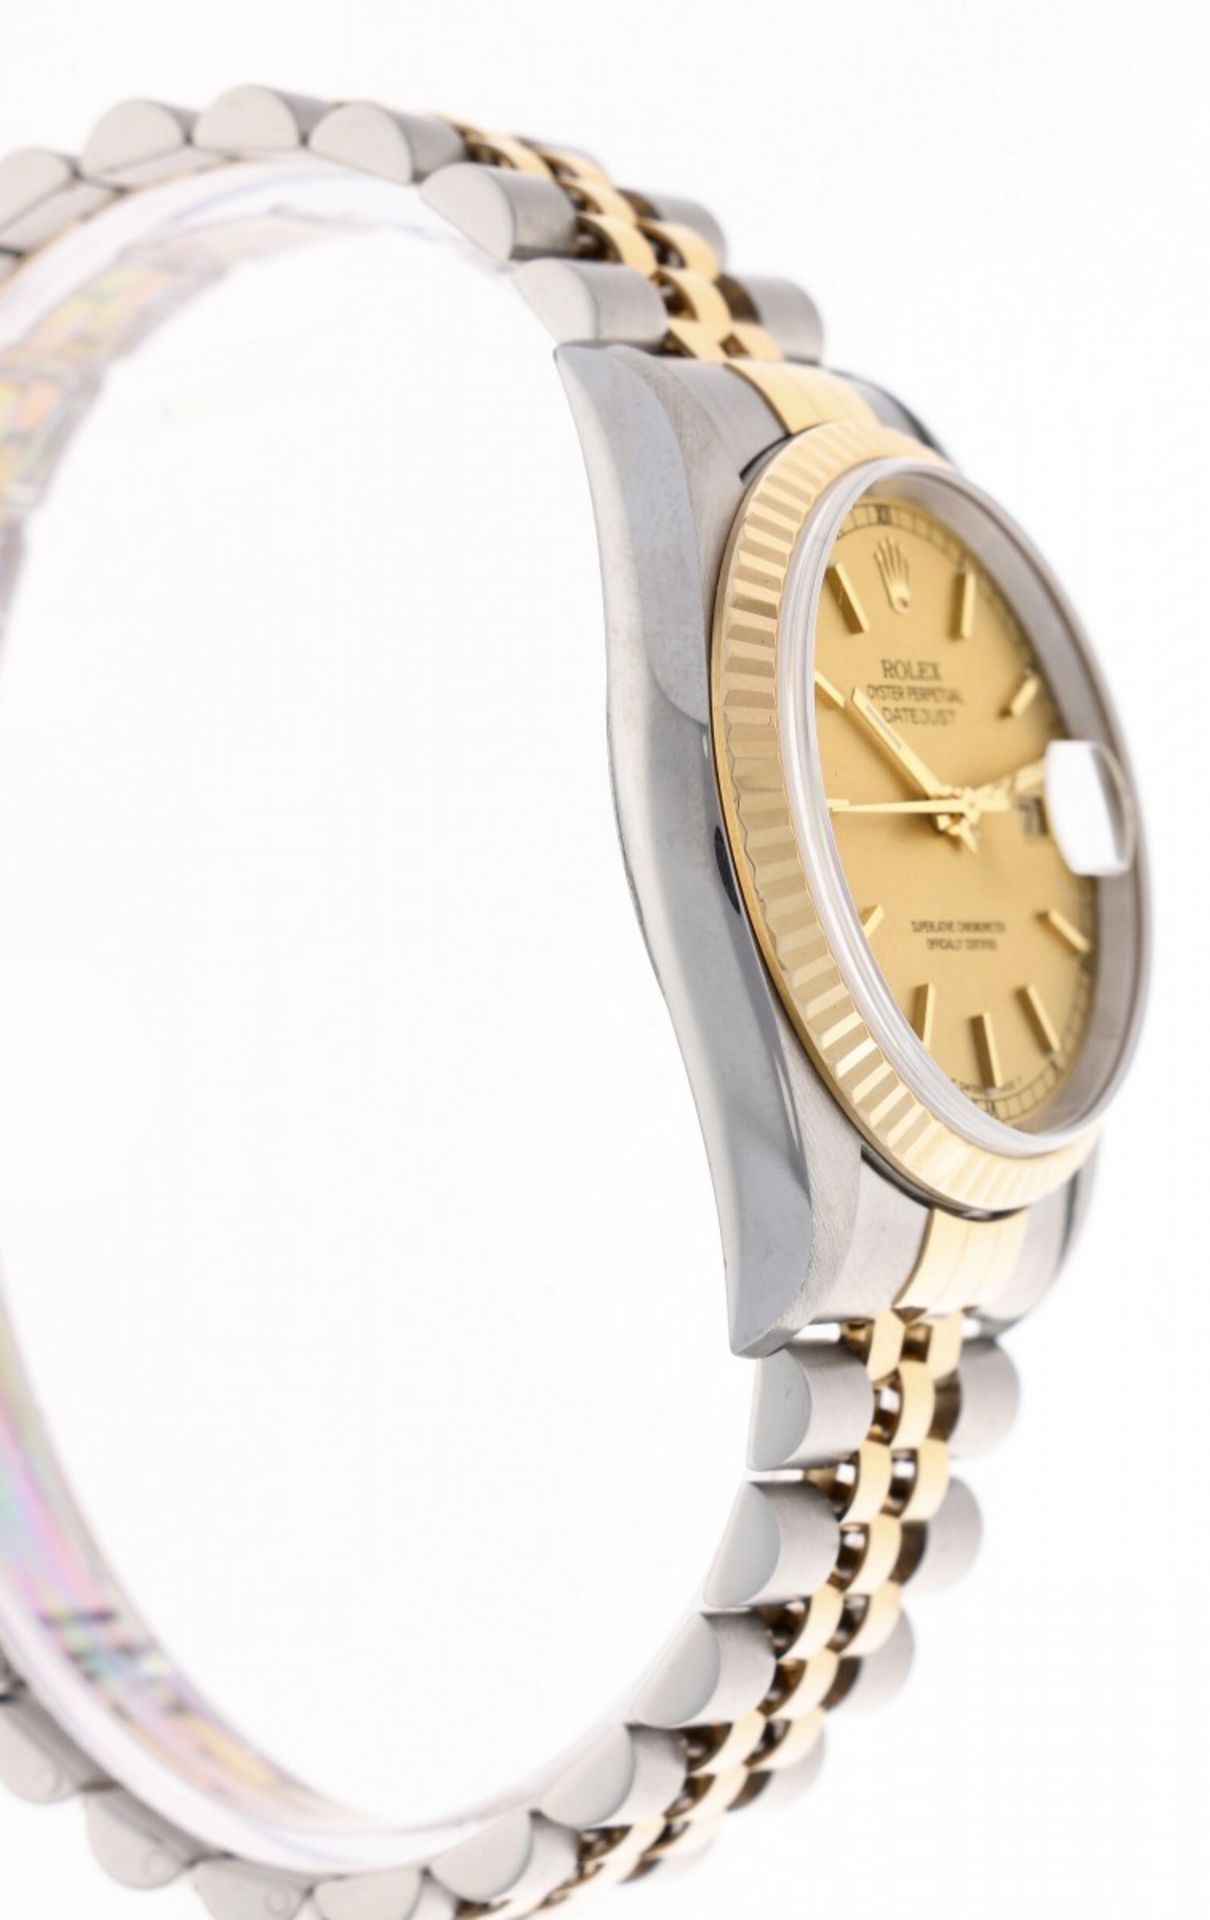 Rolex Datejust 16233 - Men's watch - ca. 1996 - Image 4 of 5